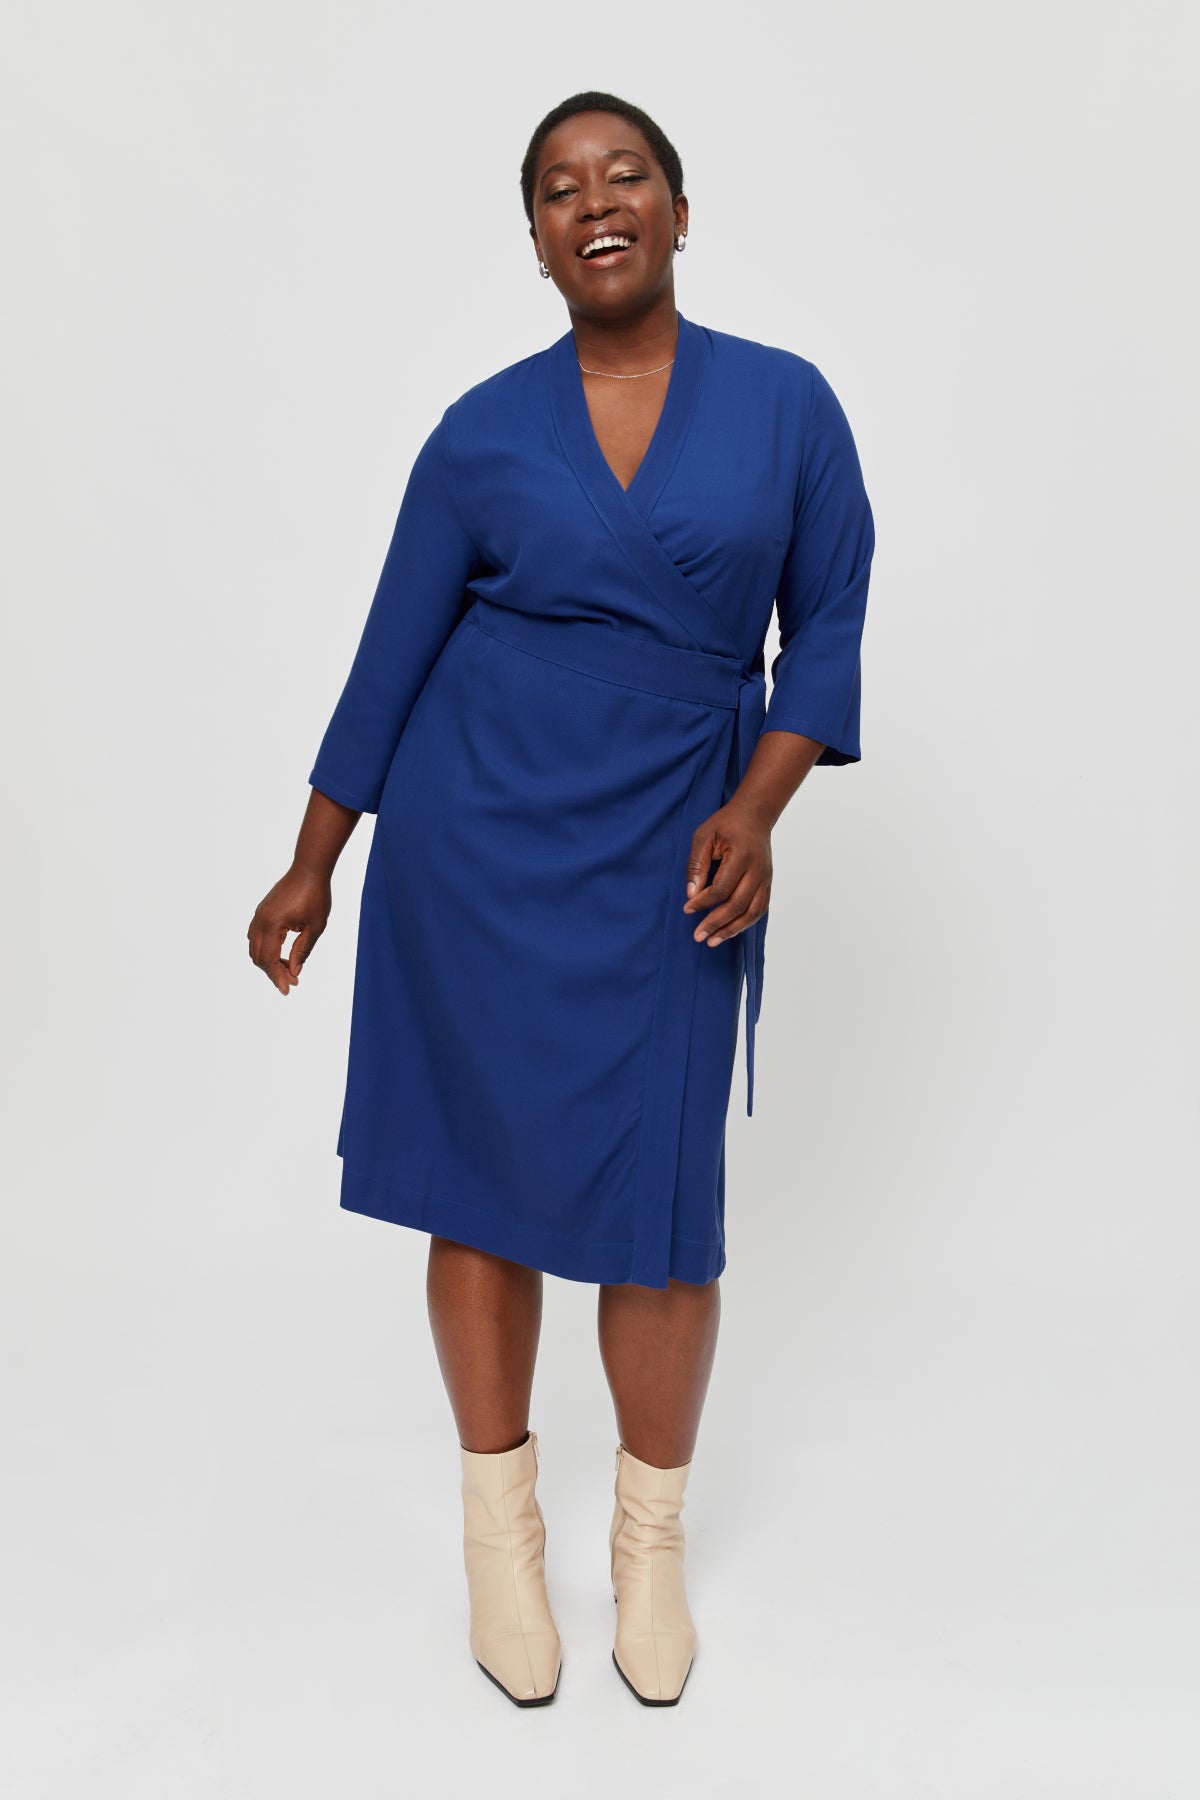 Blue Wrap Dress SANDRA. Midi Formal V Neck Wrap Dress · Cocktail and Evening Wrap Dress  - AYANI